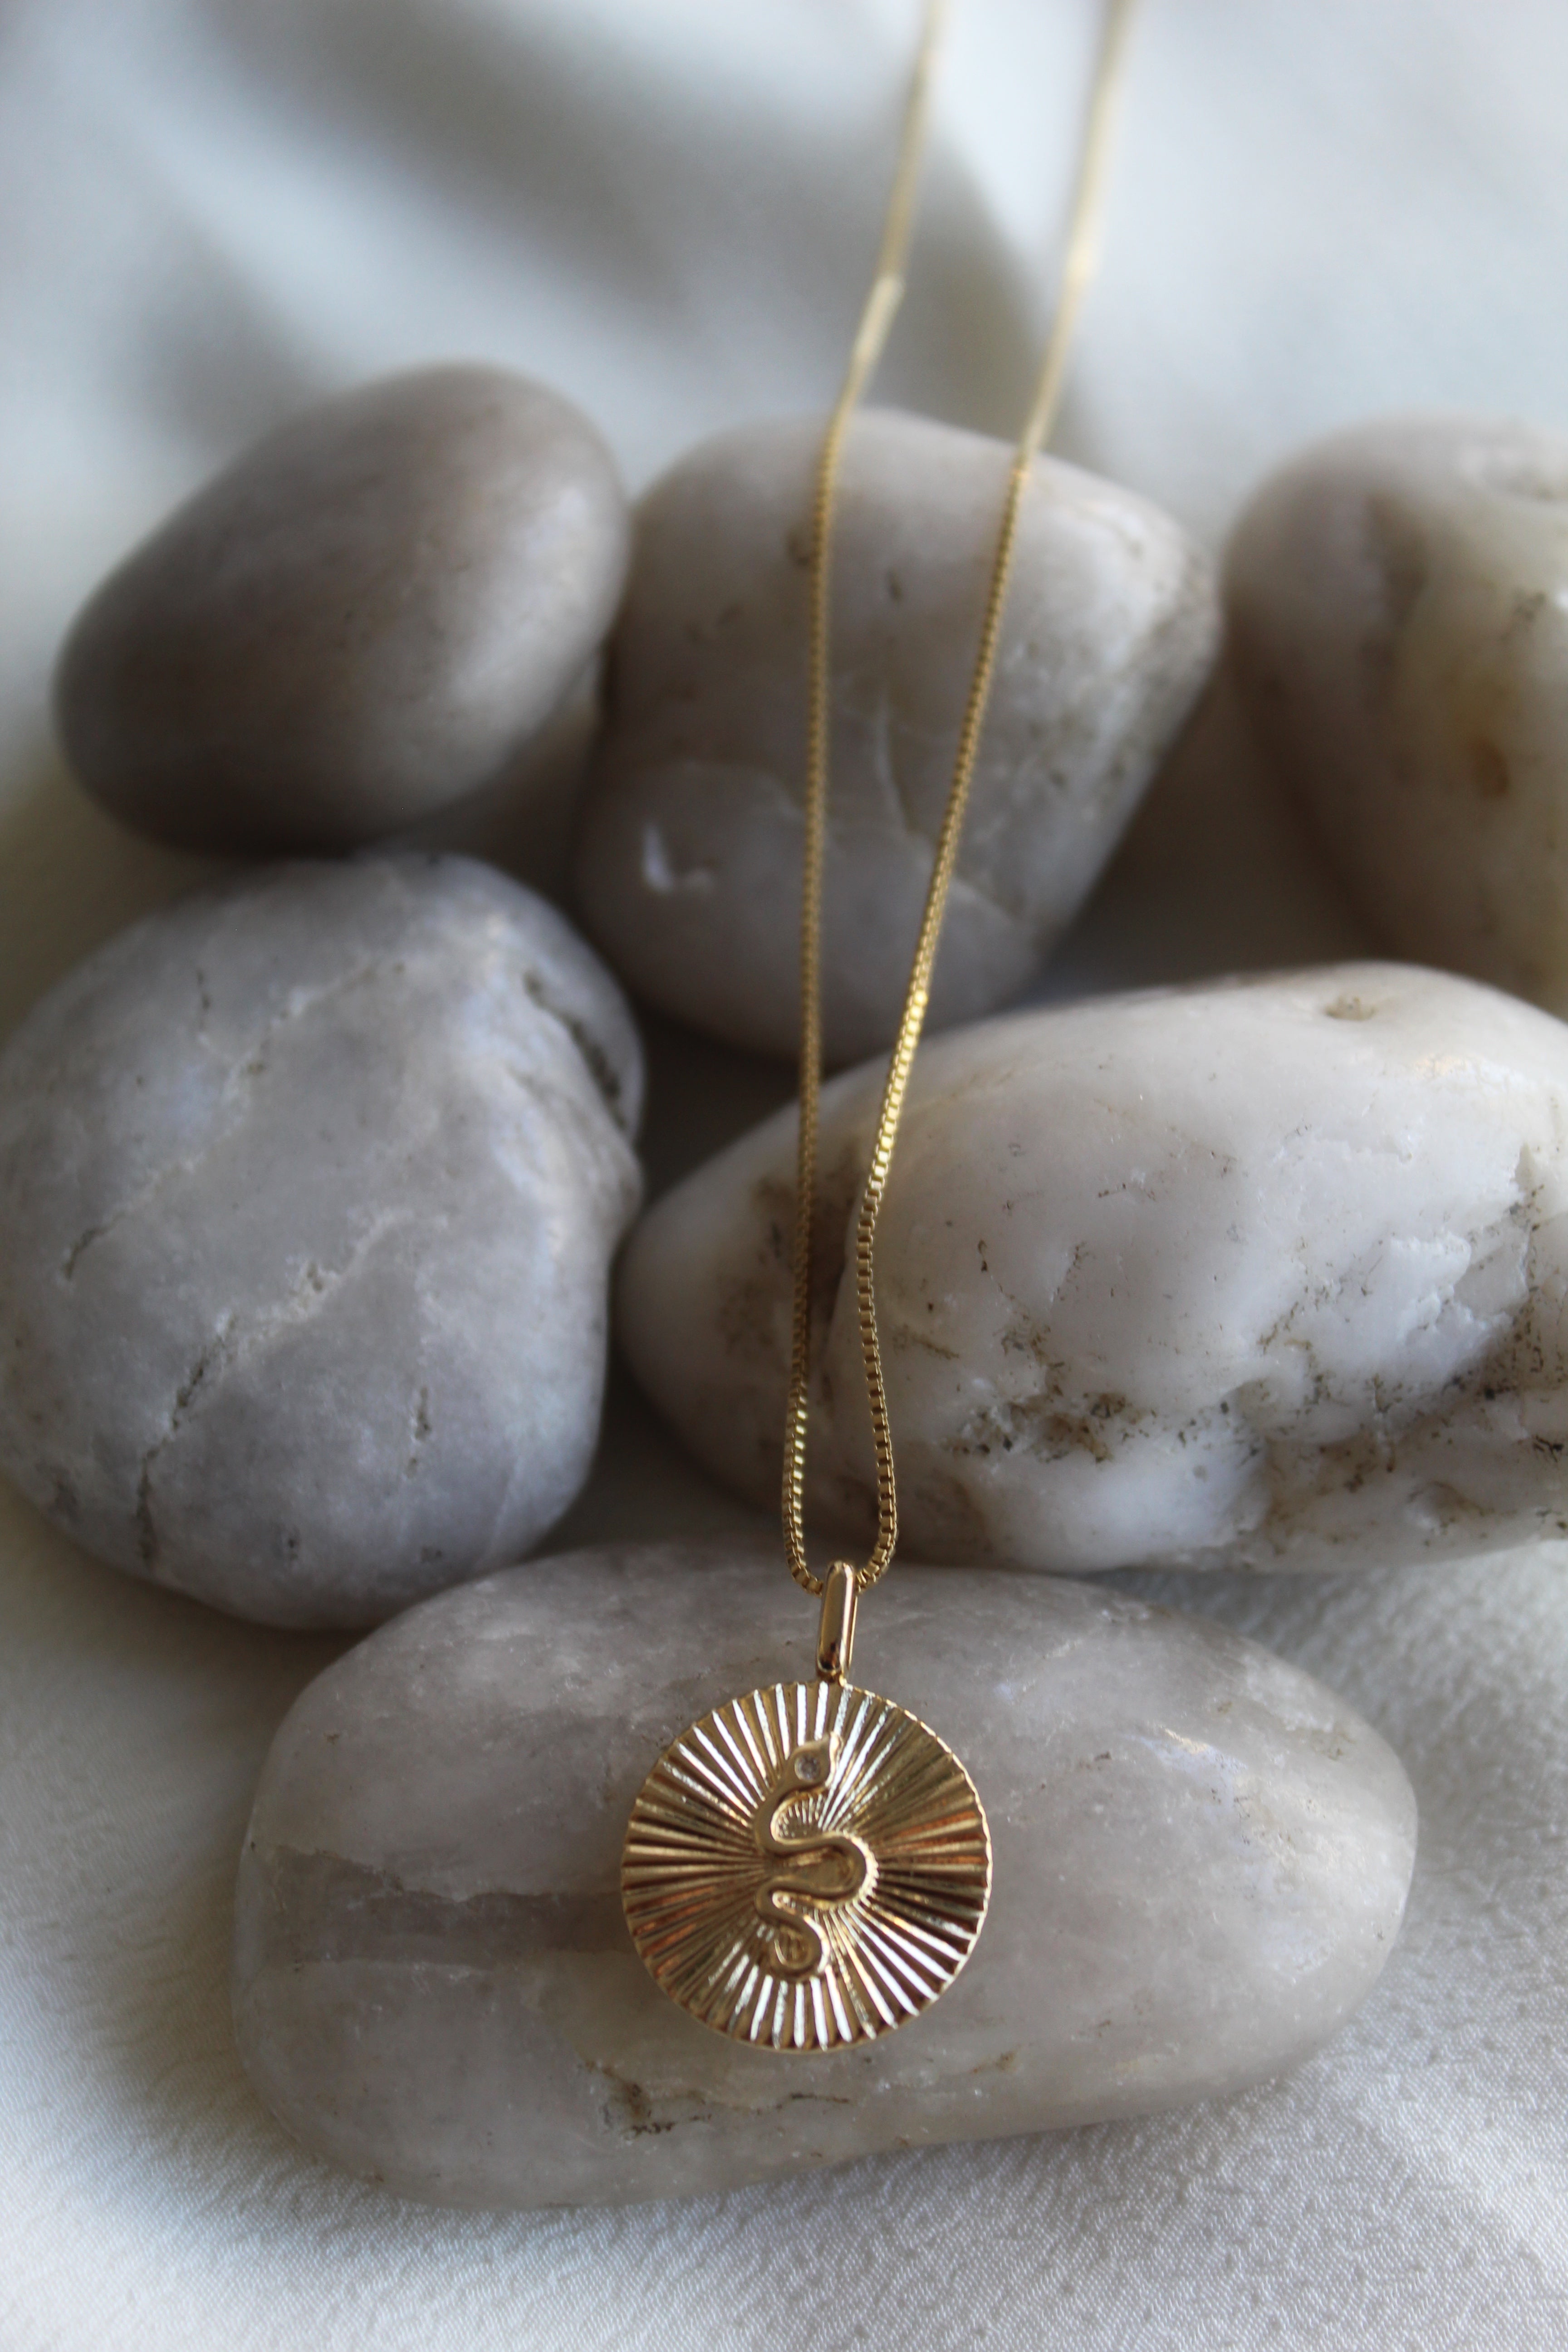 Hammered 14k Gold Disc Necklace - Aris Designs